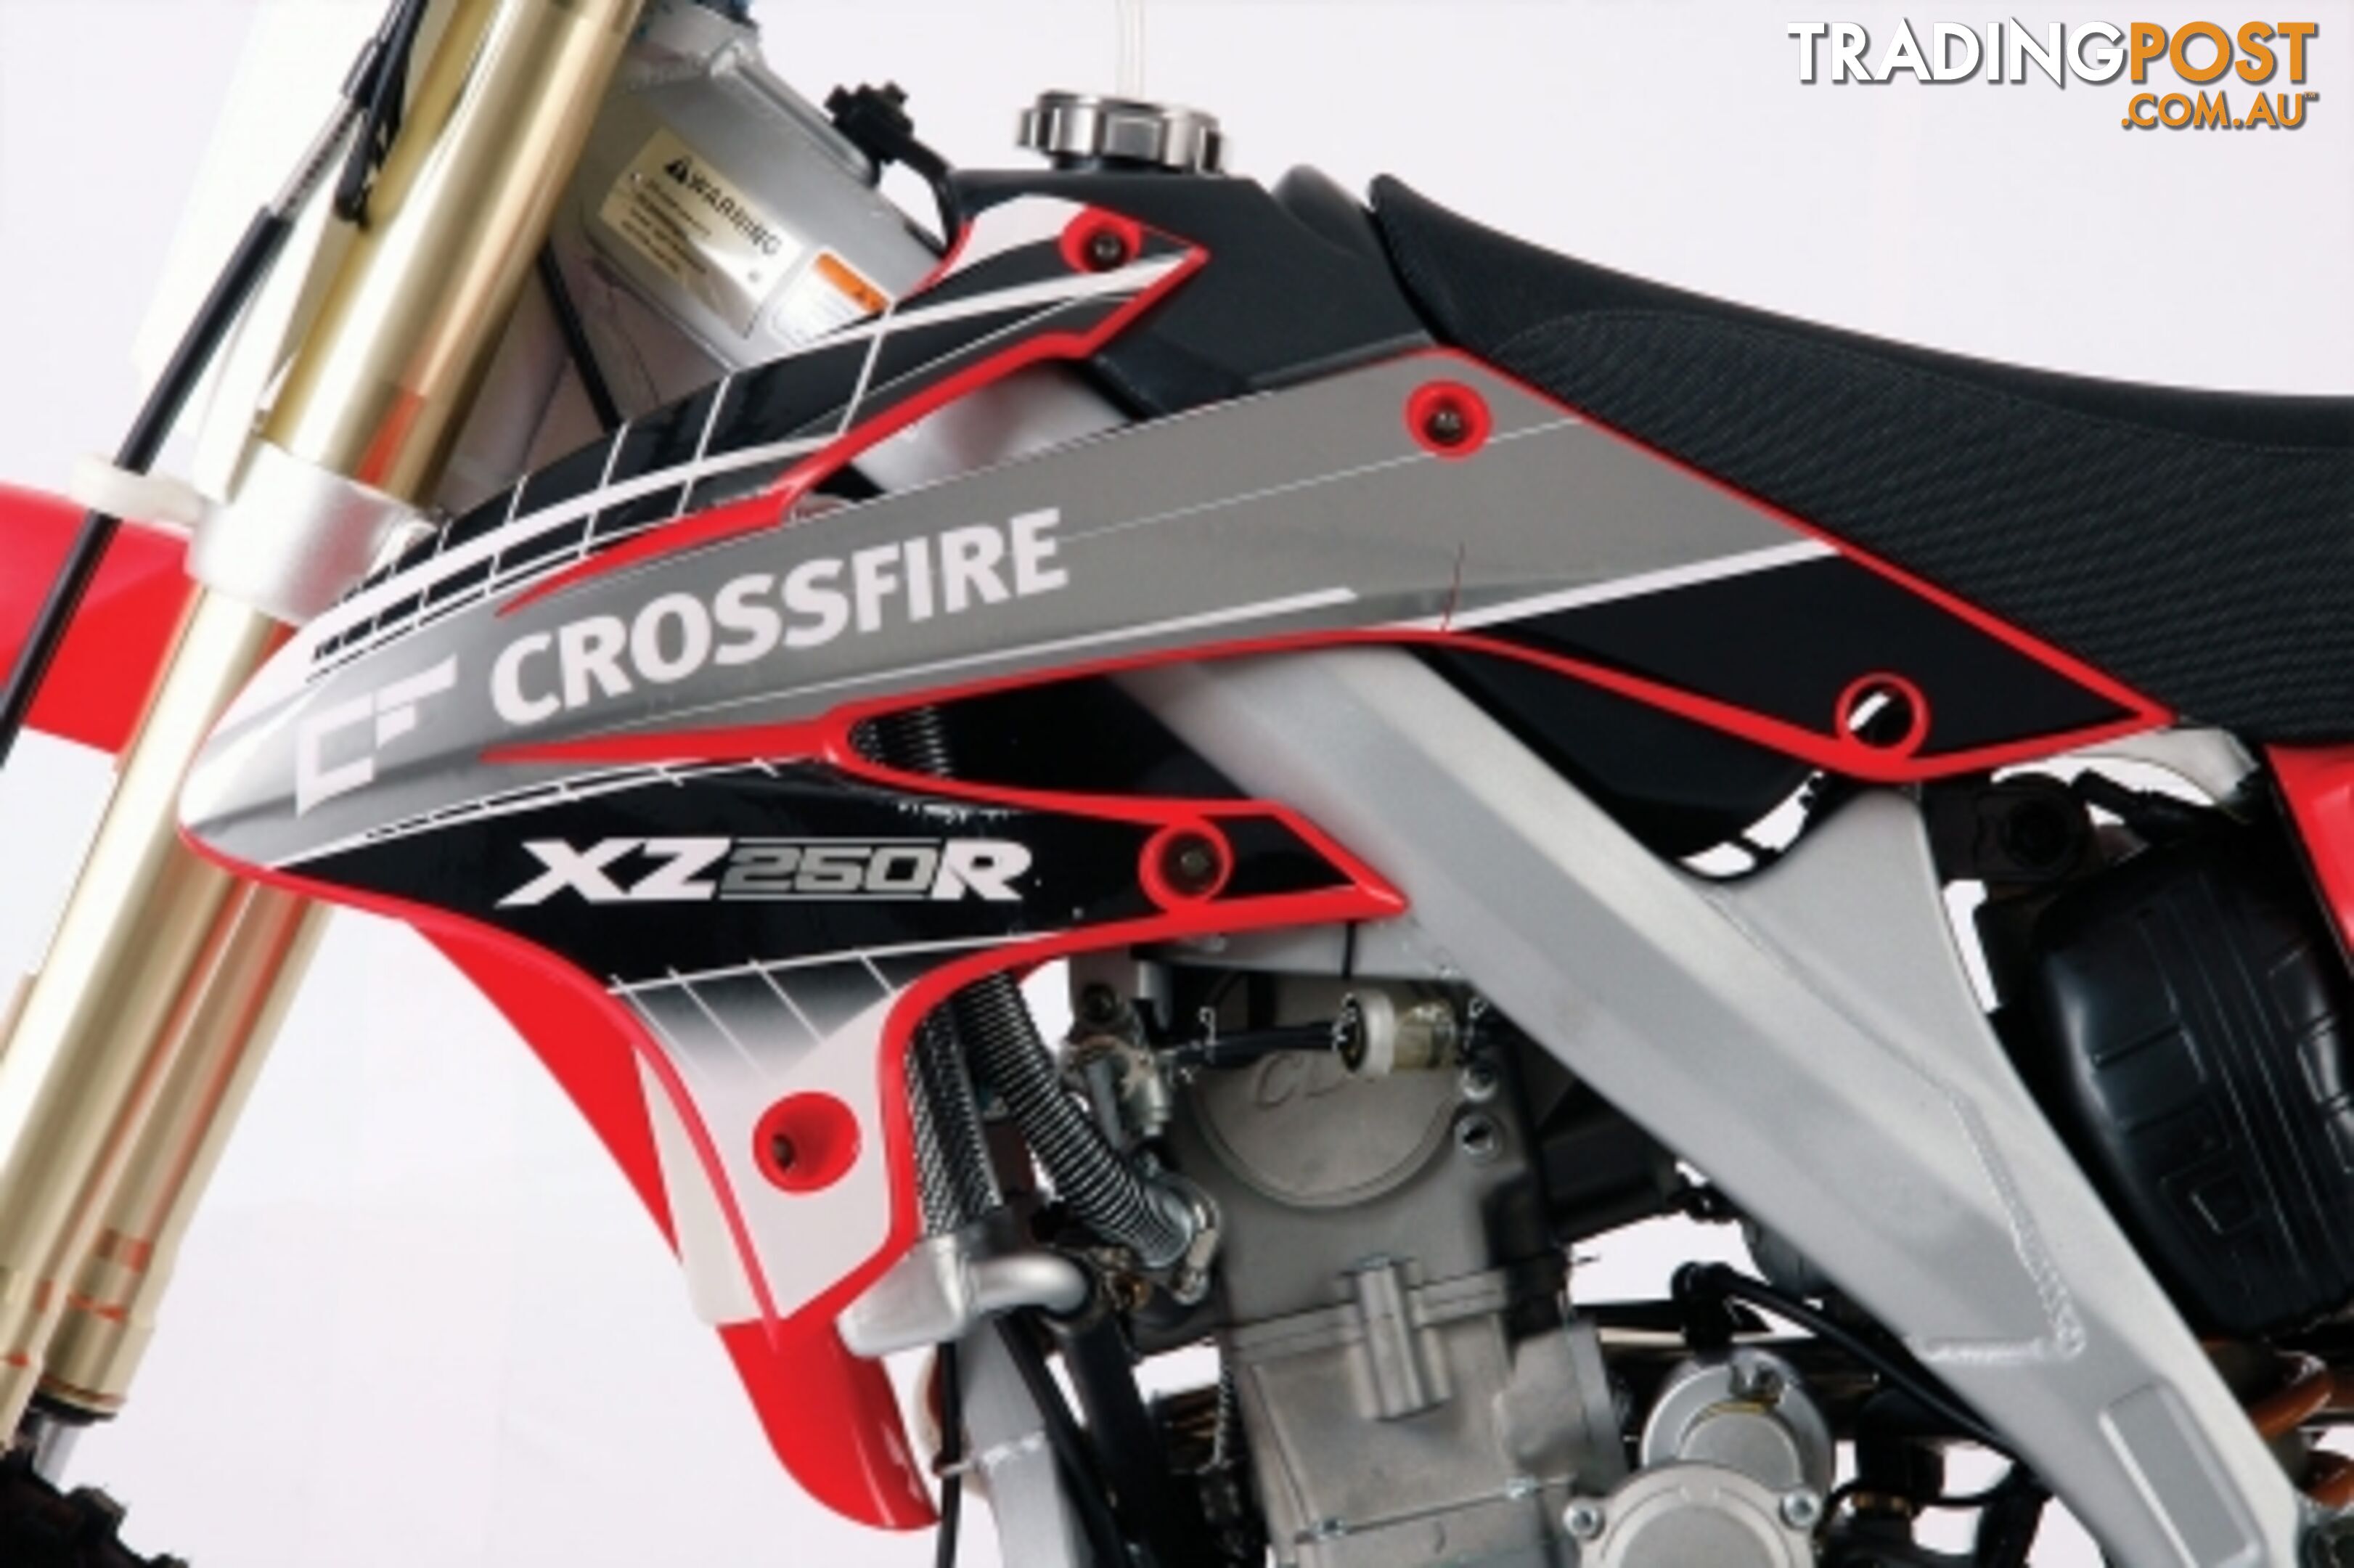 2015 CROSSFIRE XZ250R 250CC MOTOCROSS